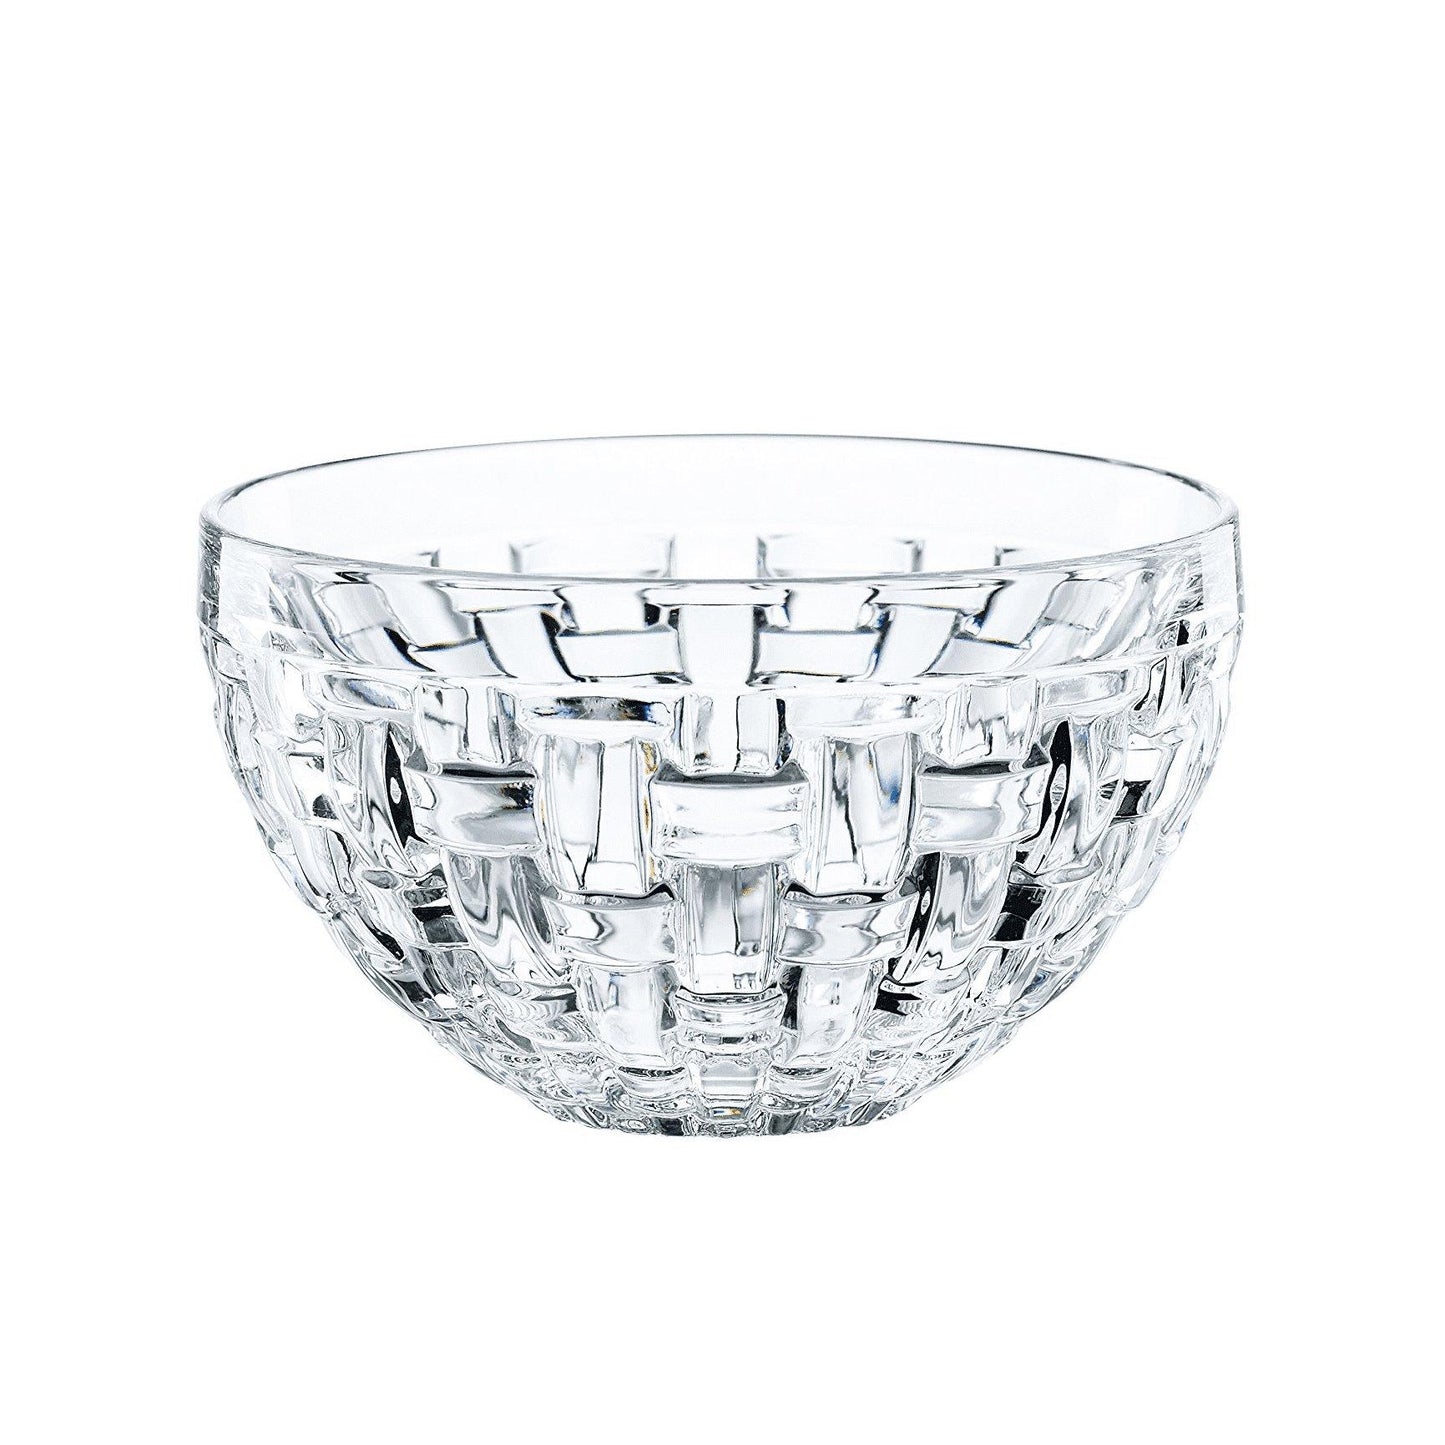 Woven design crystal dip bowl